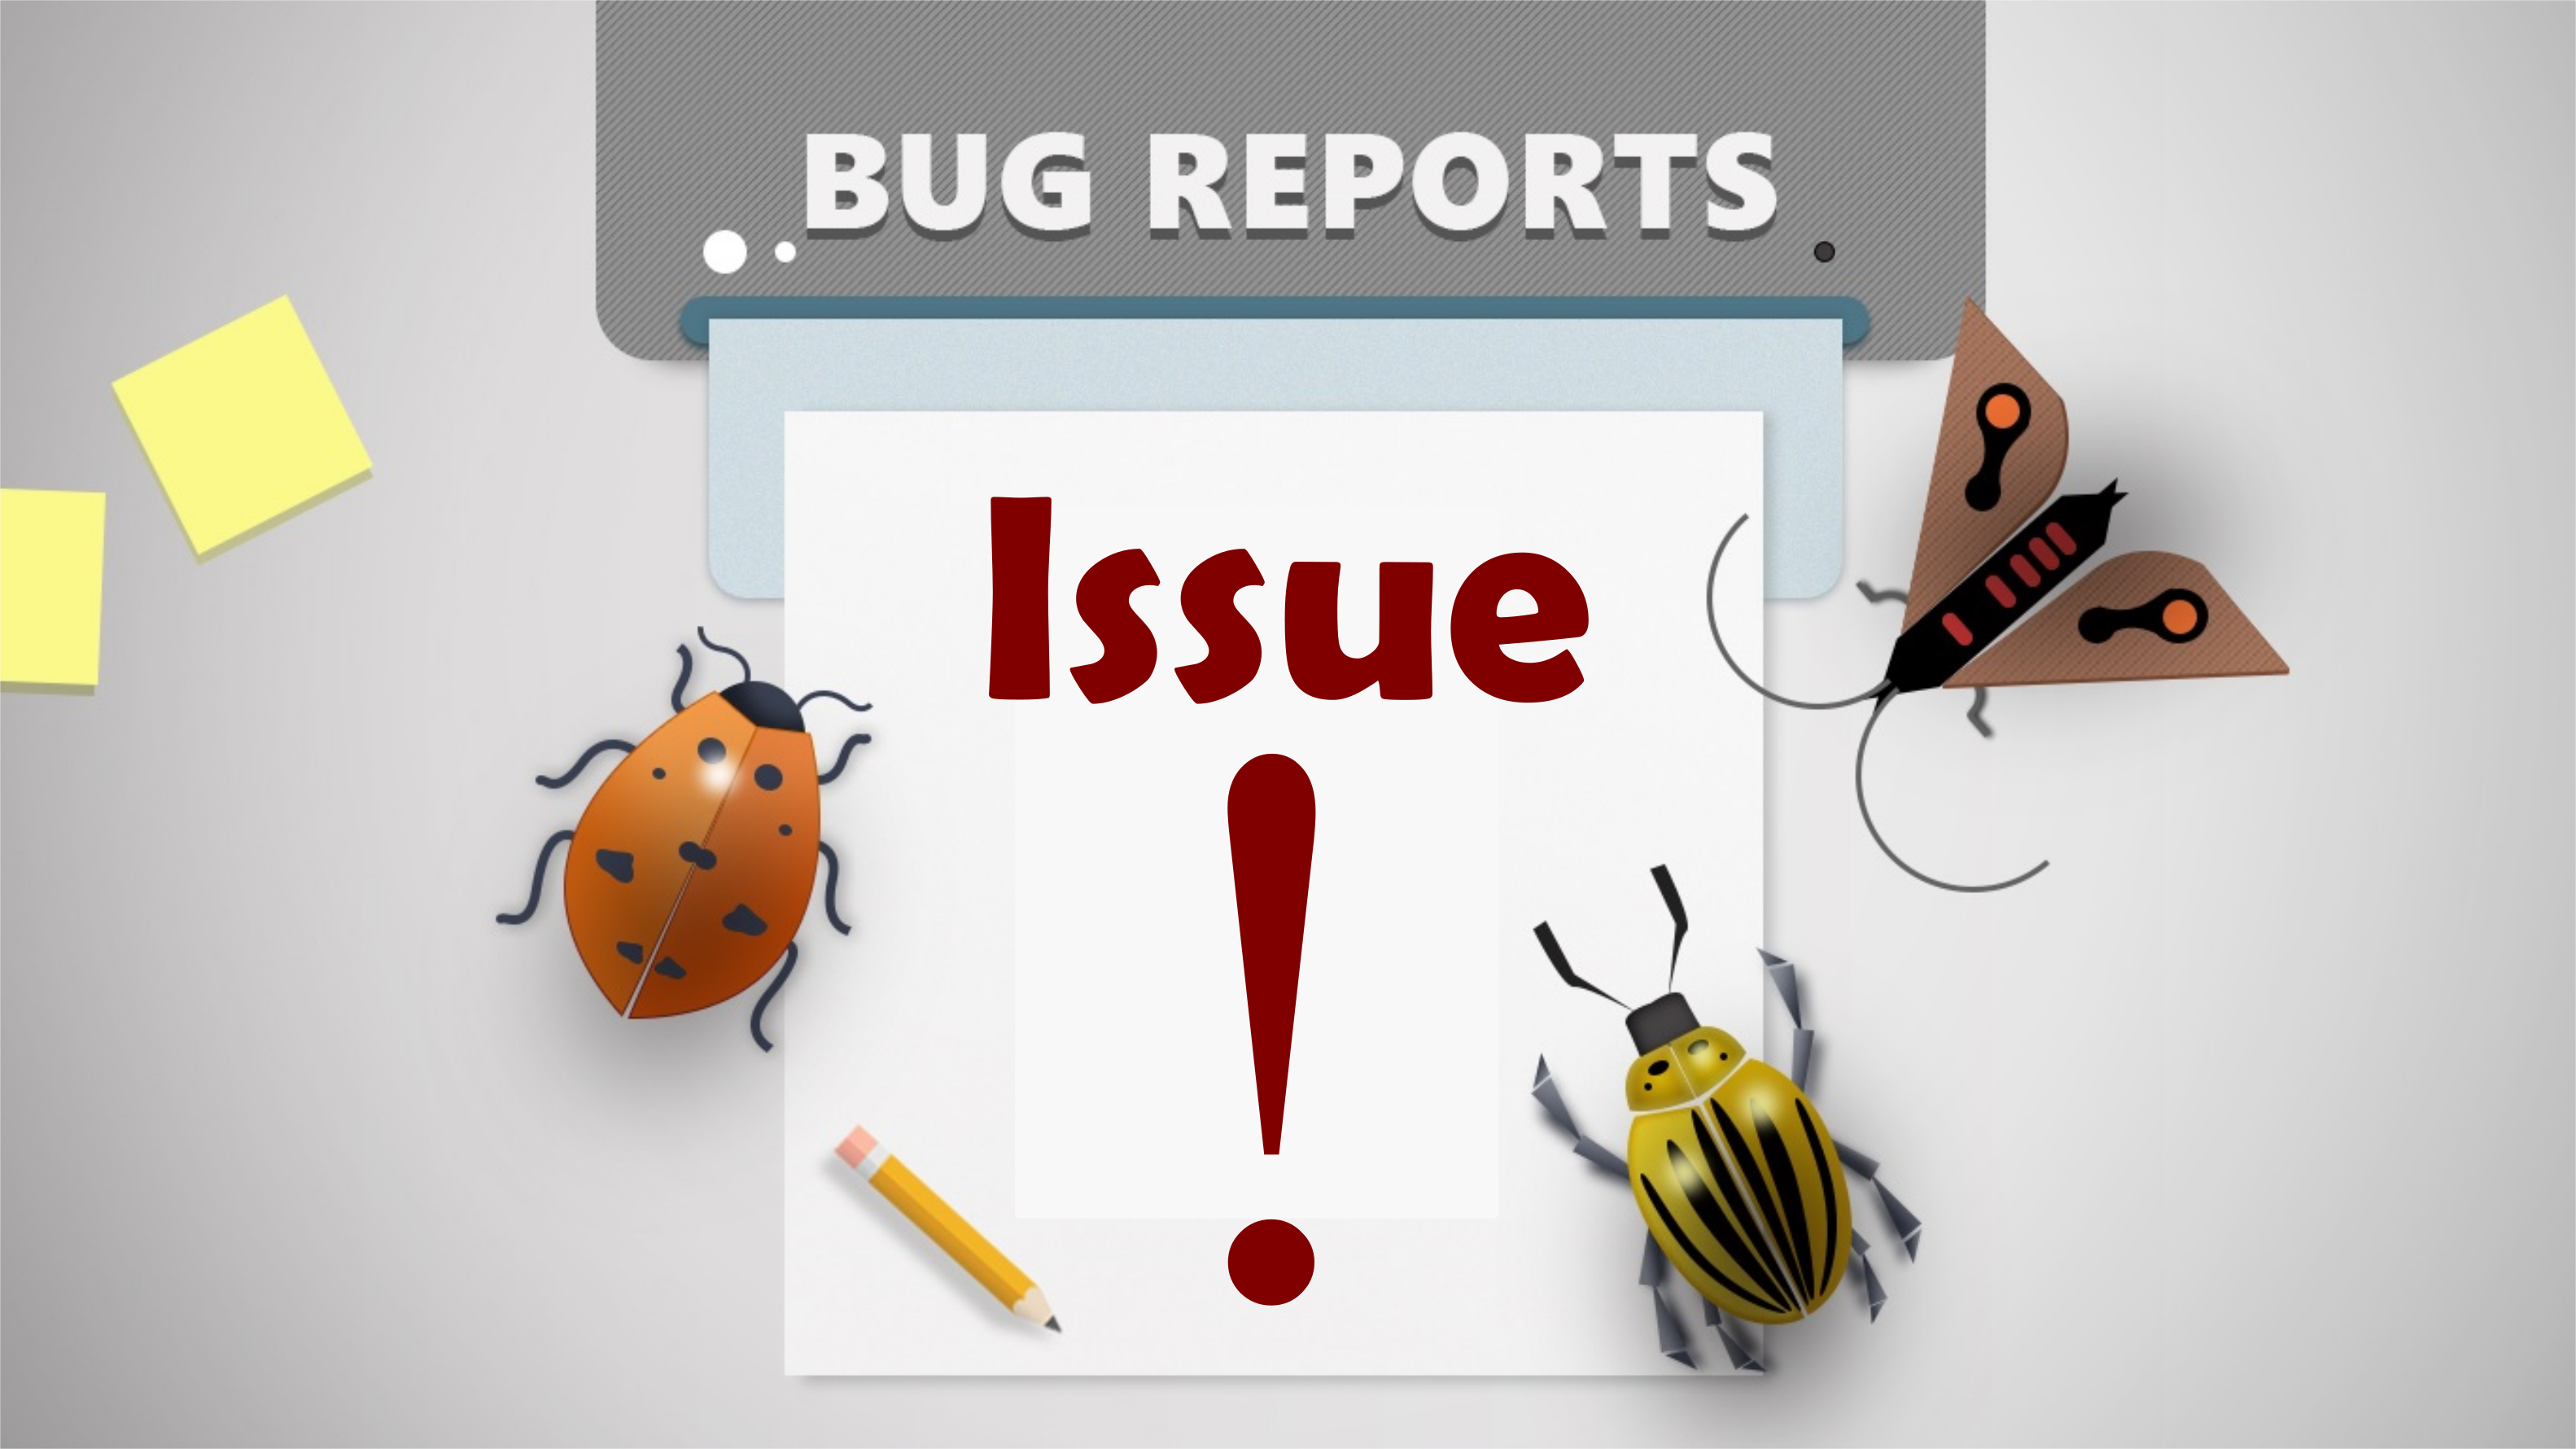 Report an issue. Bug Report. Bug репорт. Баг репорт шаблон. Значок Bug Report.